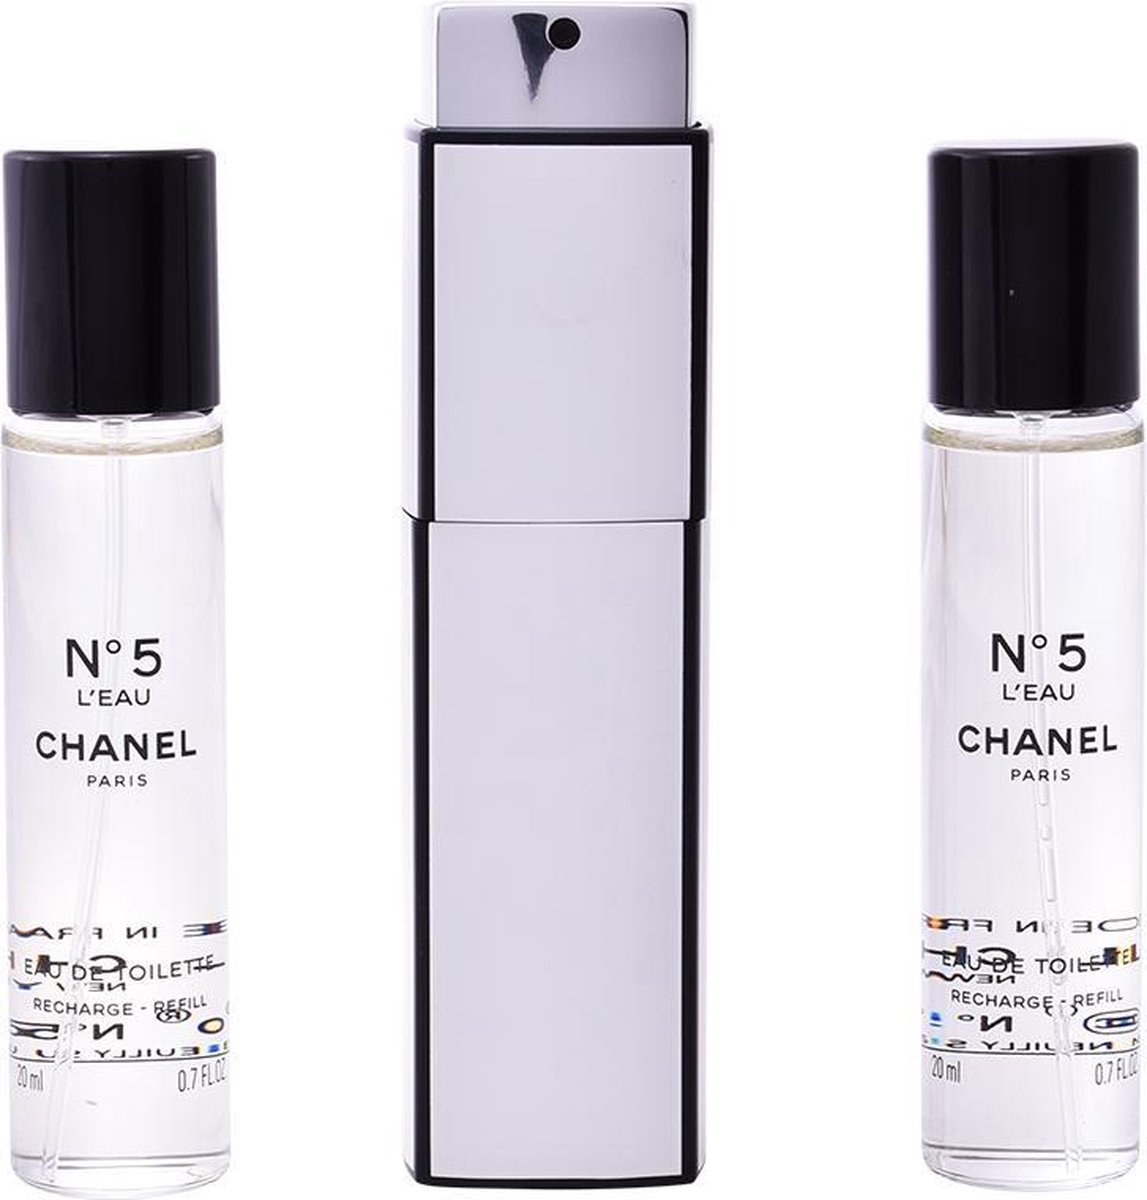 Chanel N°5 L'Eau - 3 x 20 ml - eau de toilette recharge purse spray - tasspray - Chanel